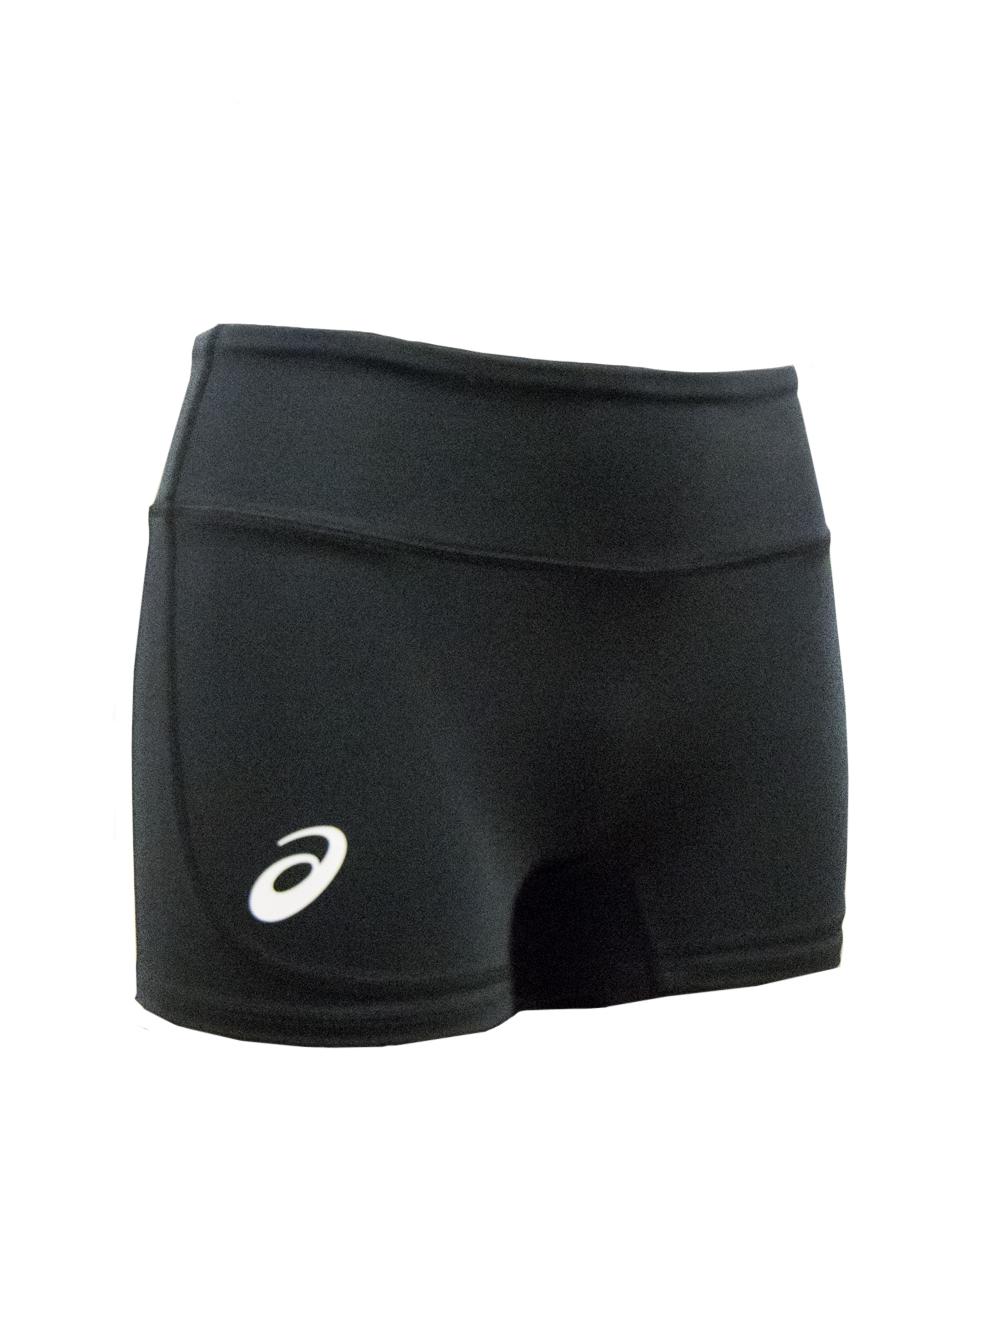 Genuine ASICS Women's 3 Circuit Nylon/Spandex Compression Volleyball Shorts